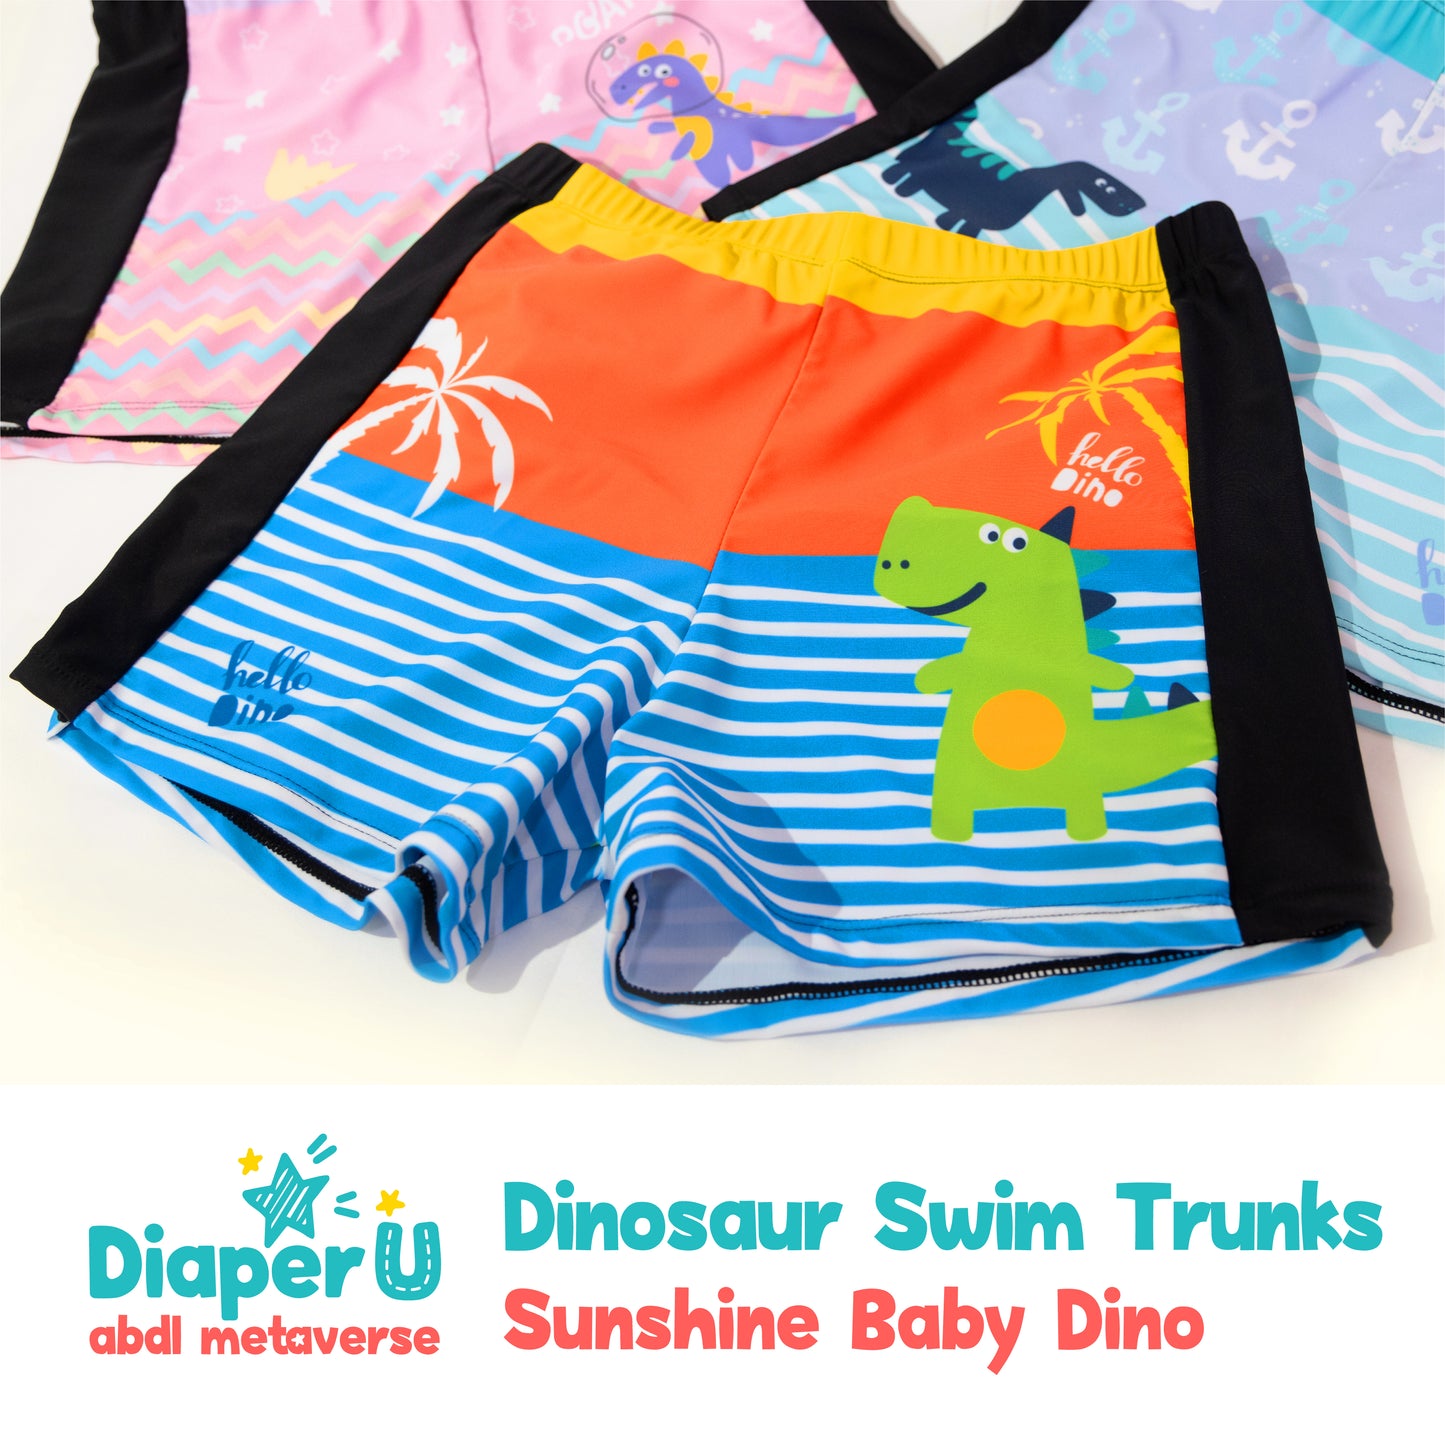 ABDL Dinosaur Swim Trunks - Sunshine Baby Dino